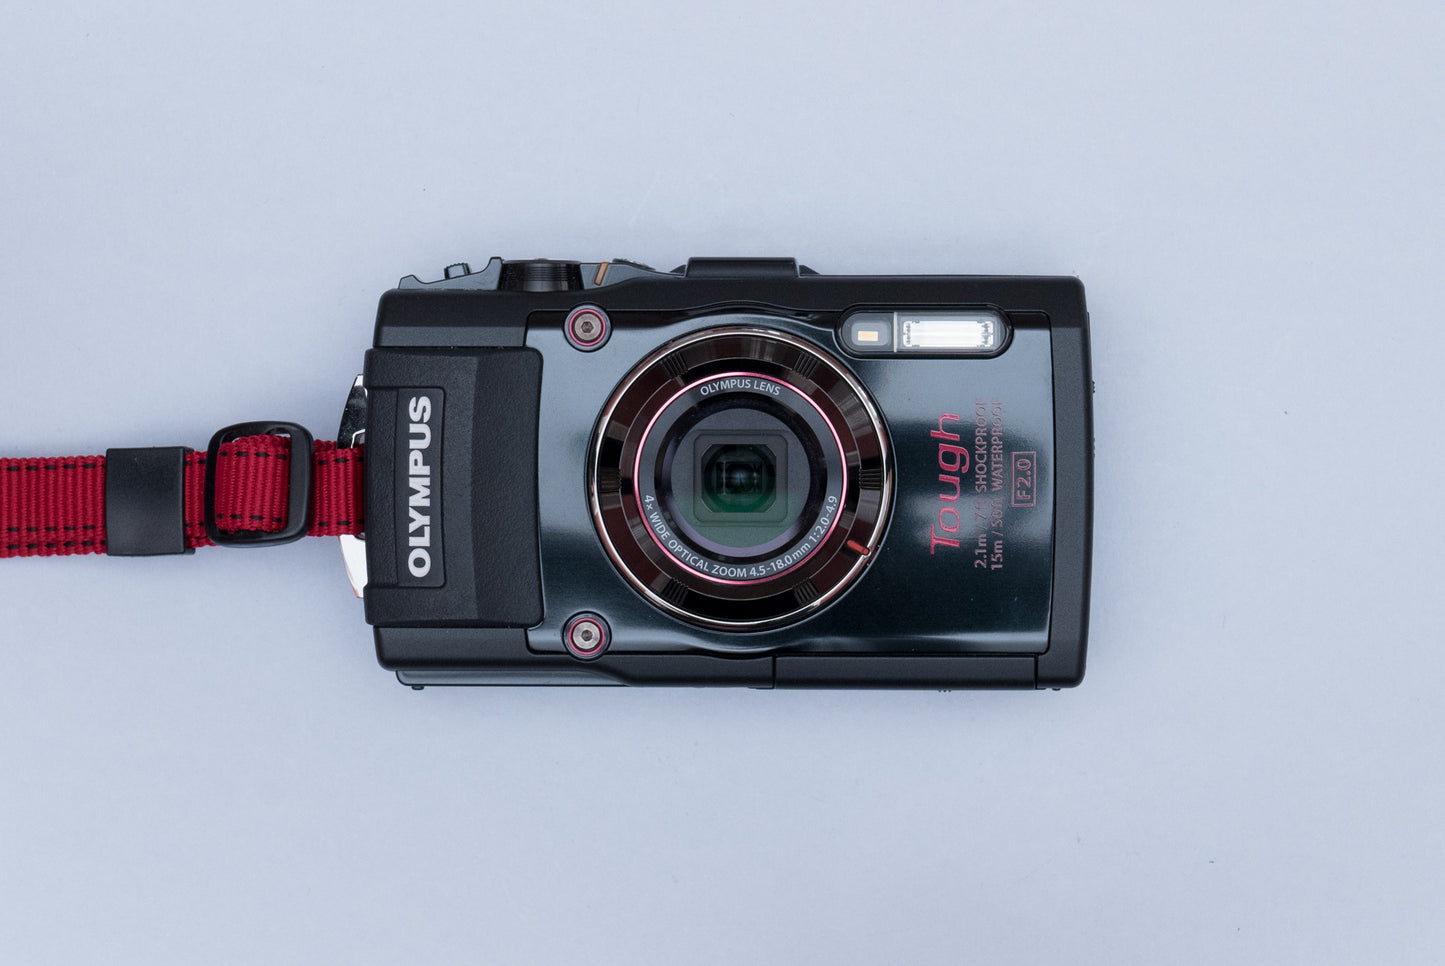 Olympus Stylus TG-4 Tough Compact Digital Camera